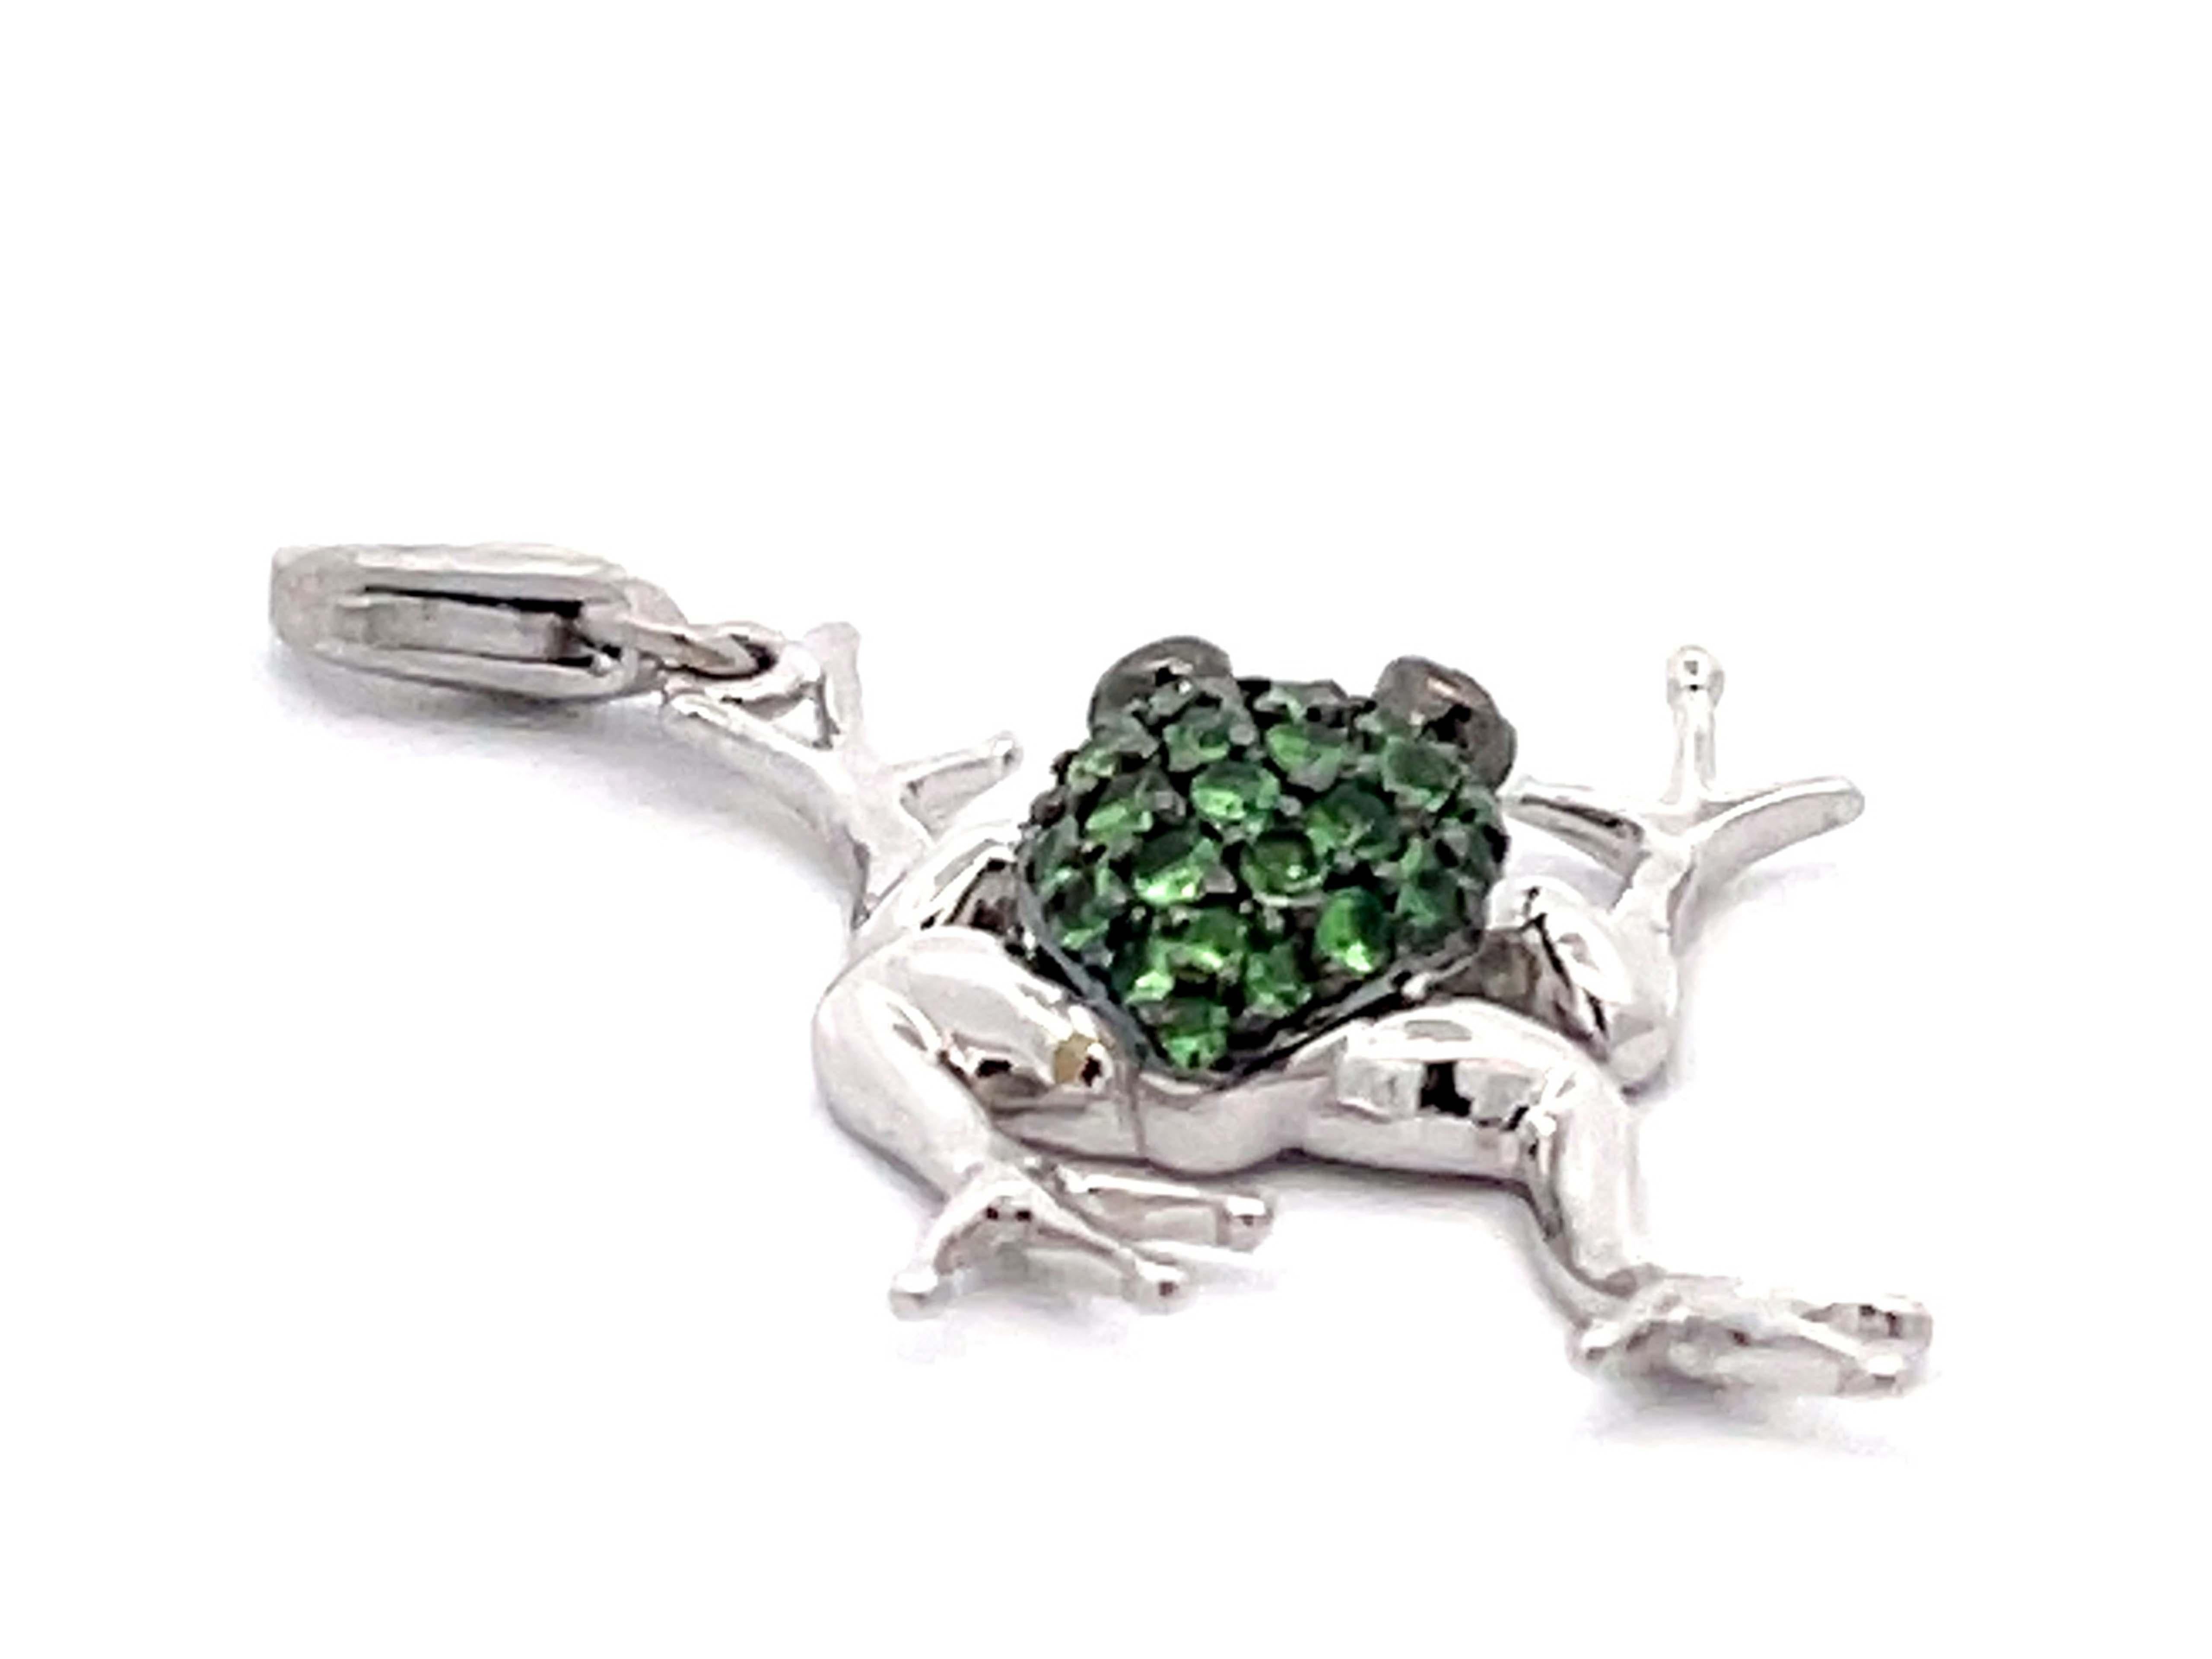 diamond frog necklace